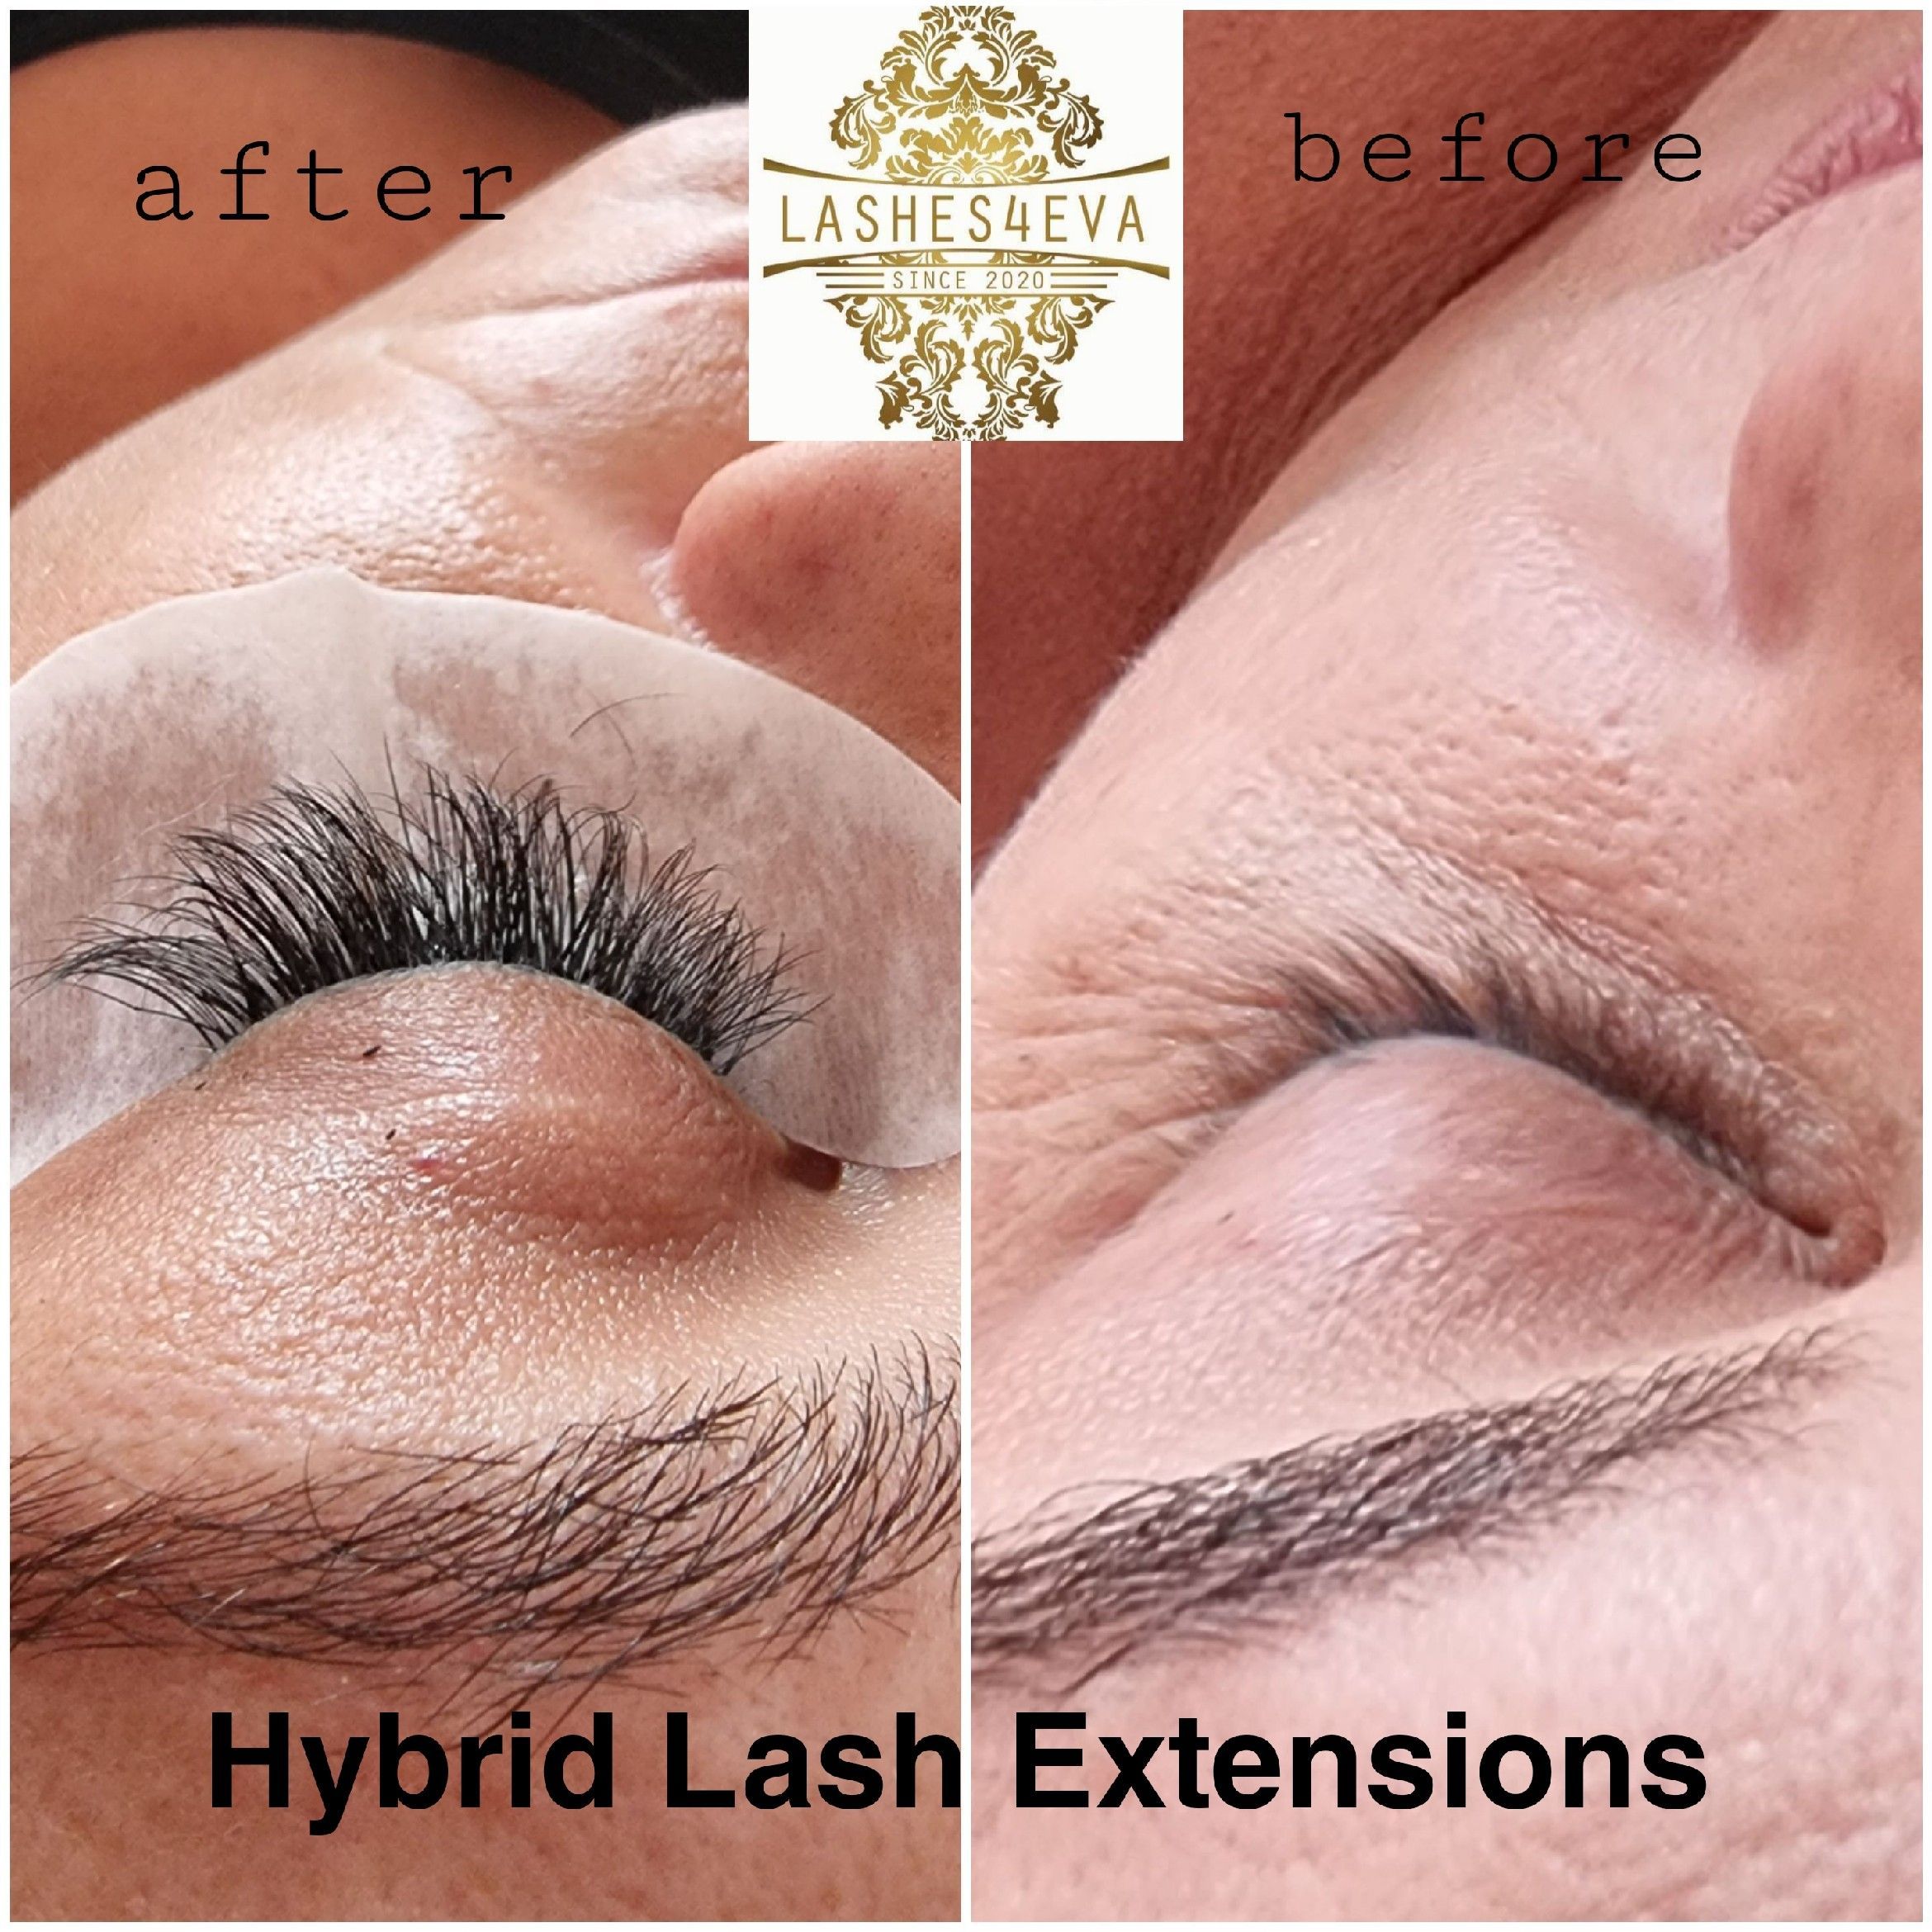 Hybrid Lash extensions- Full set portfolio